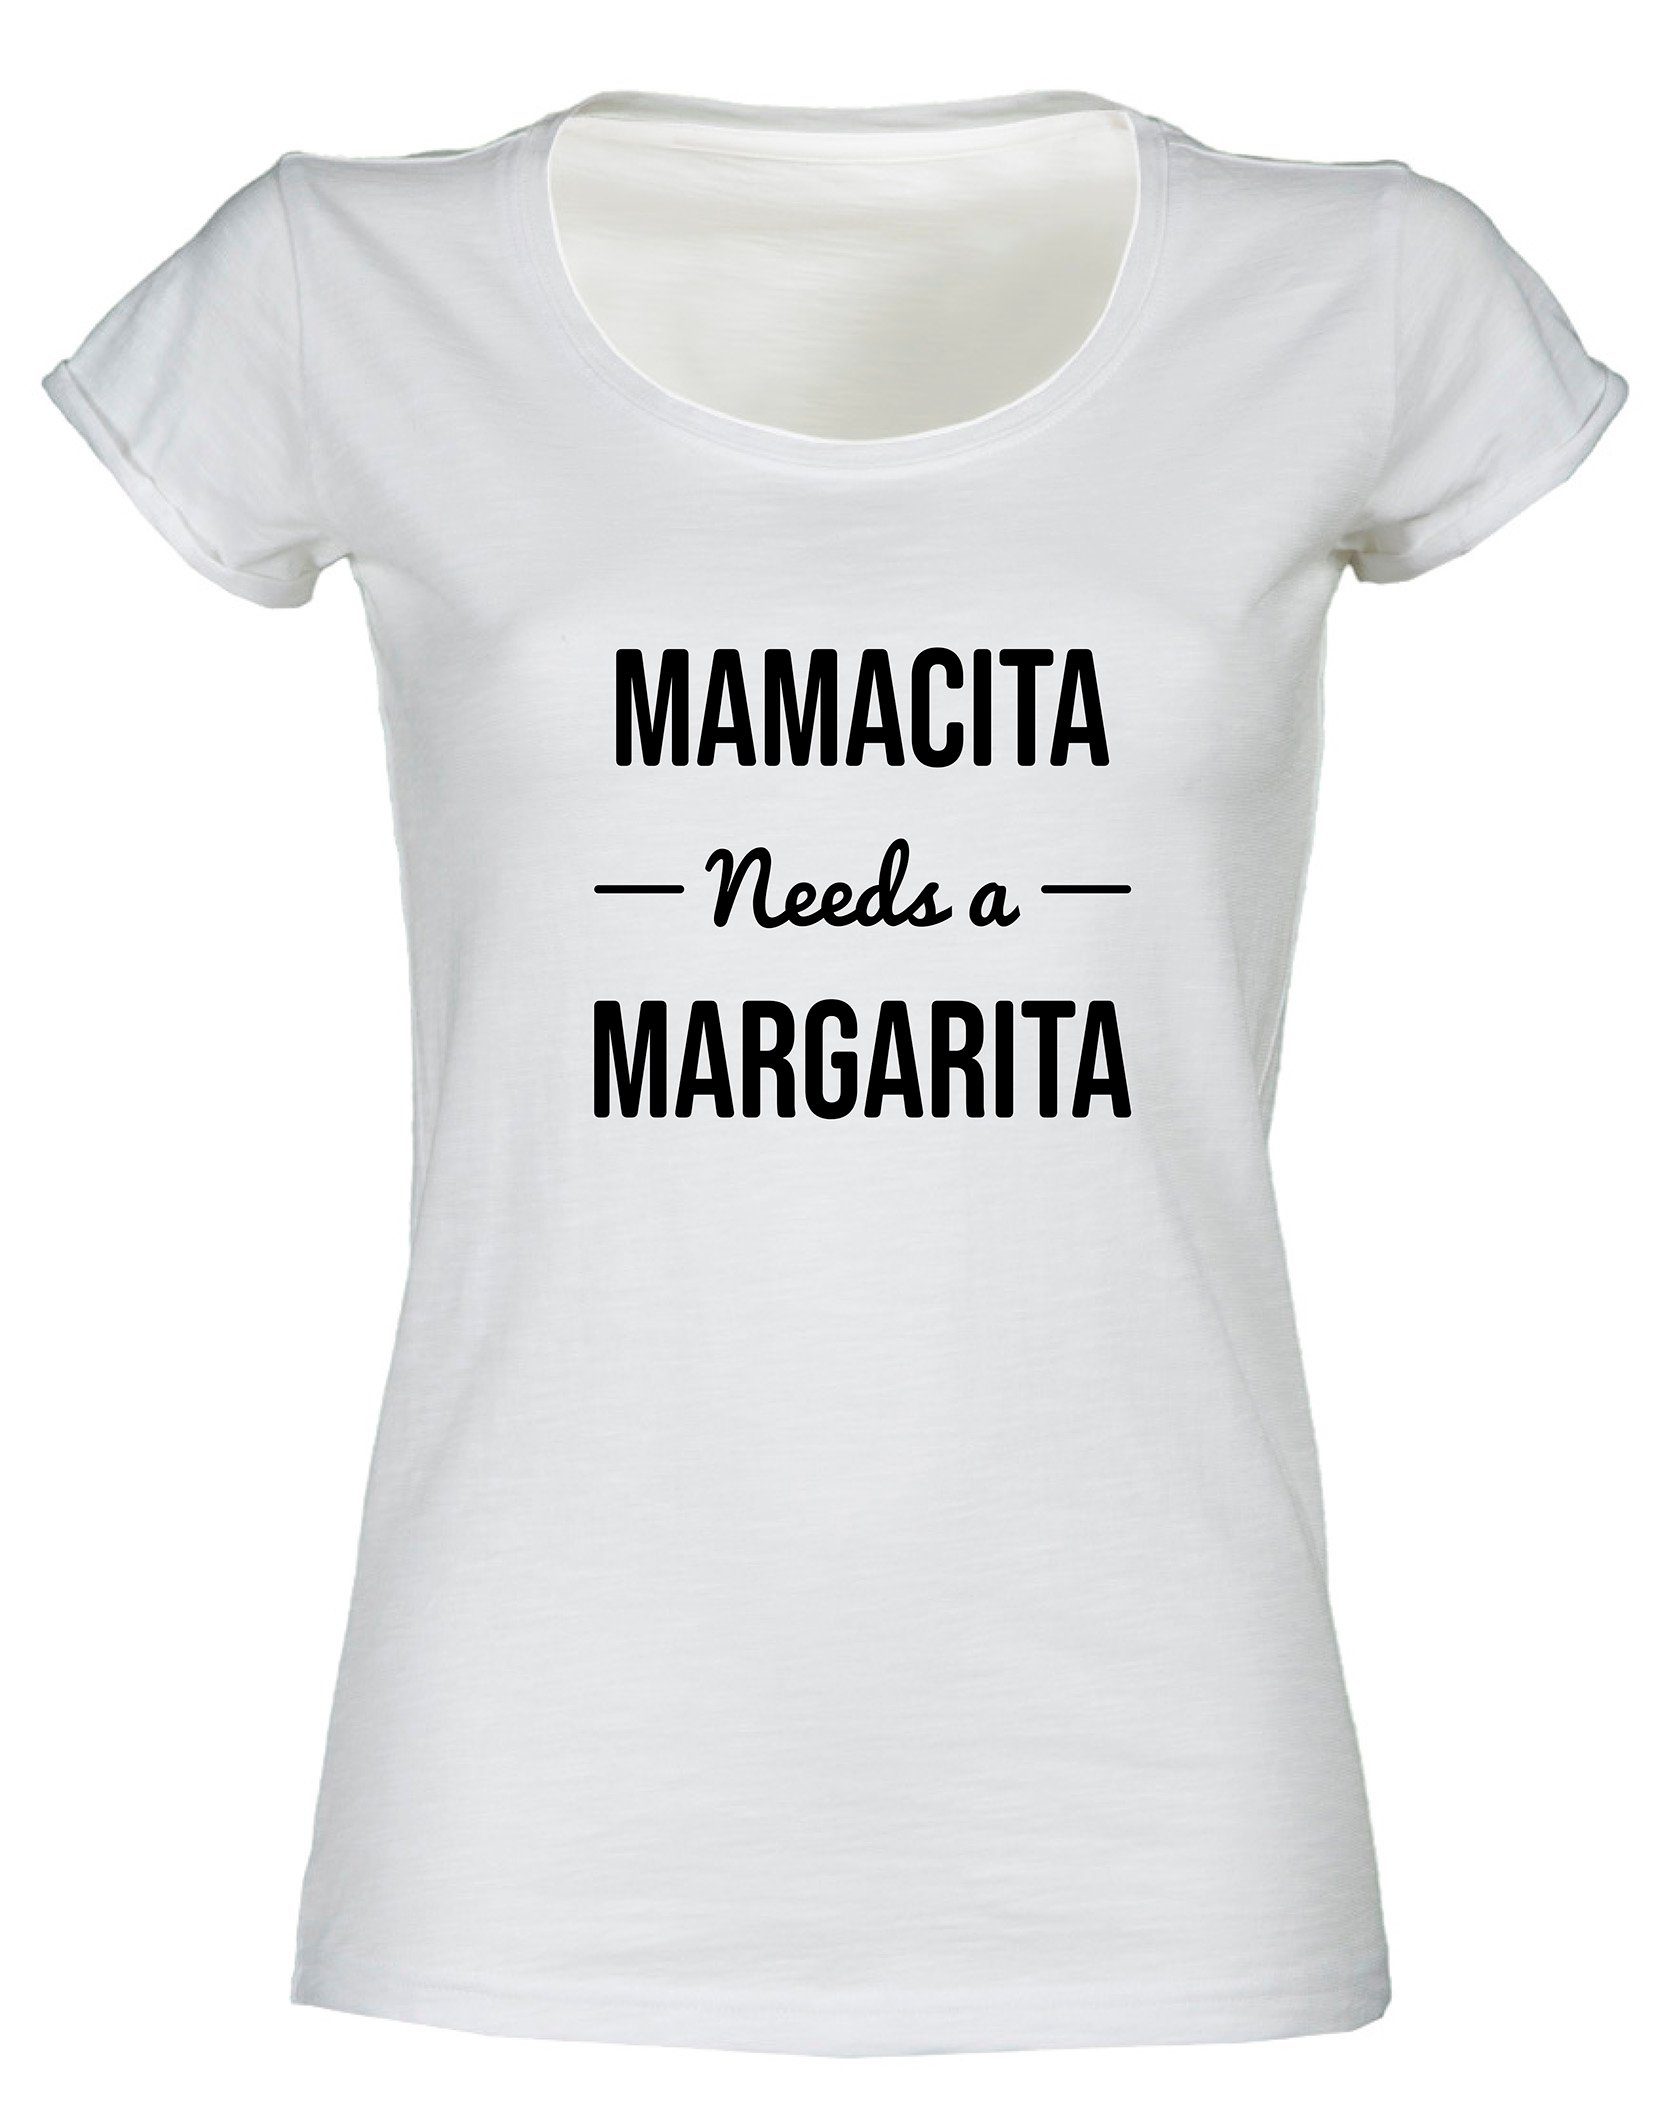 Baddery Print-Shirt Fun T-Shirt Damen - Mamacita needs a Margarita, hochwertiger Siebdruck, aus Baumwolle